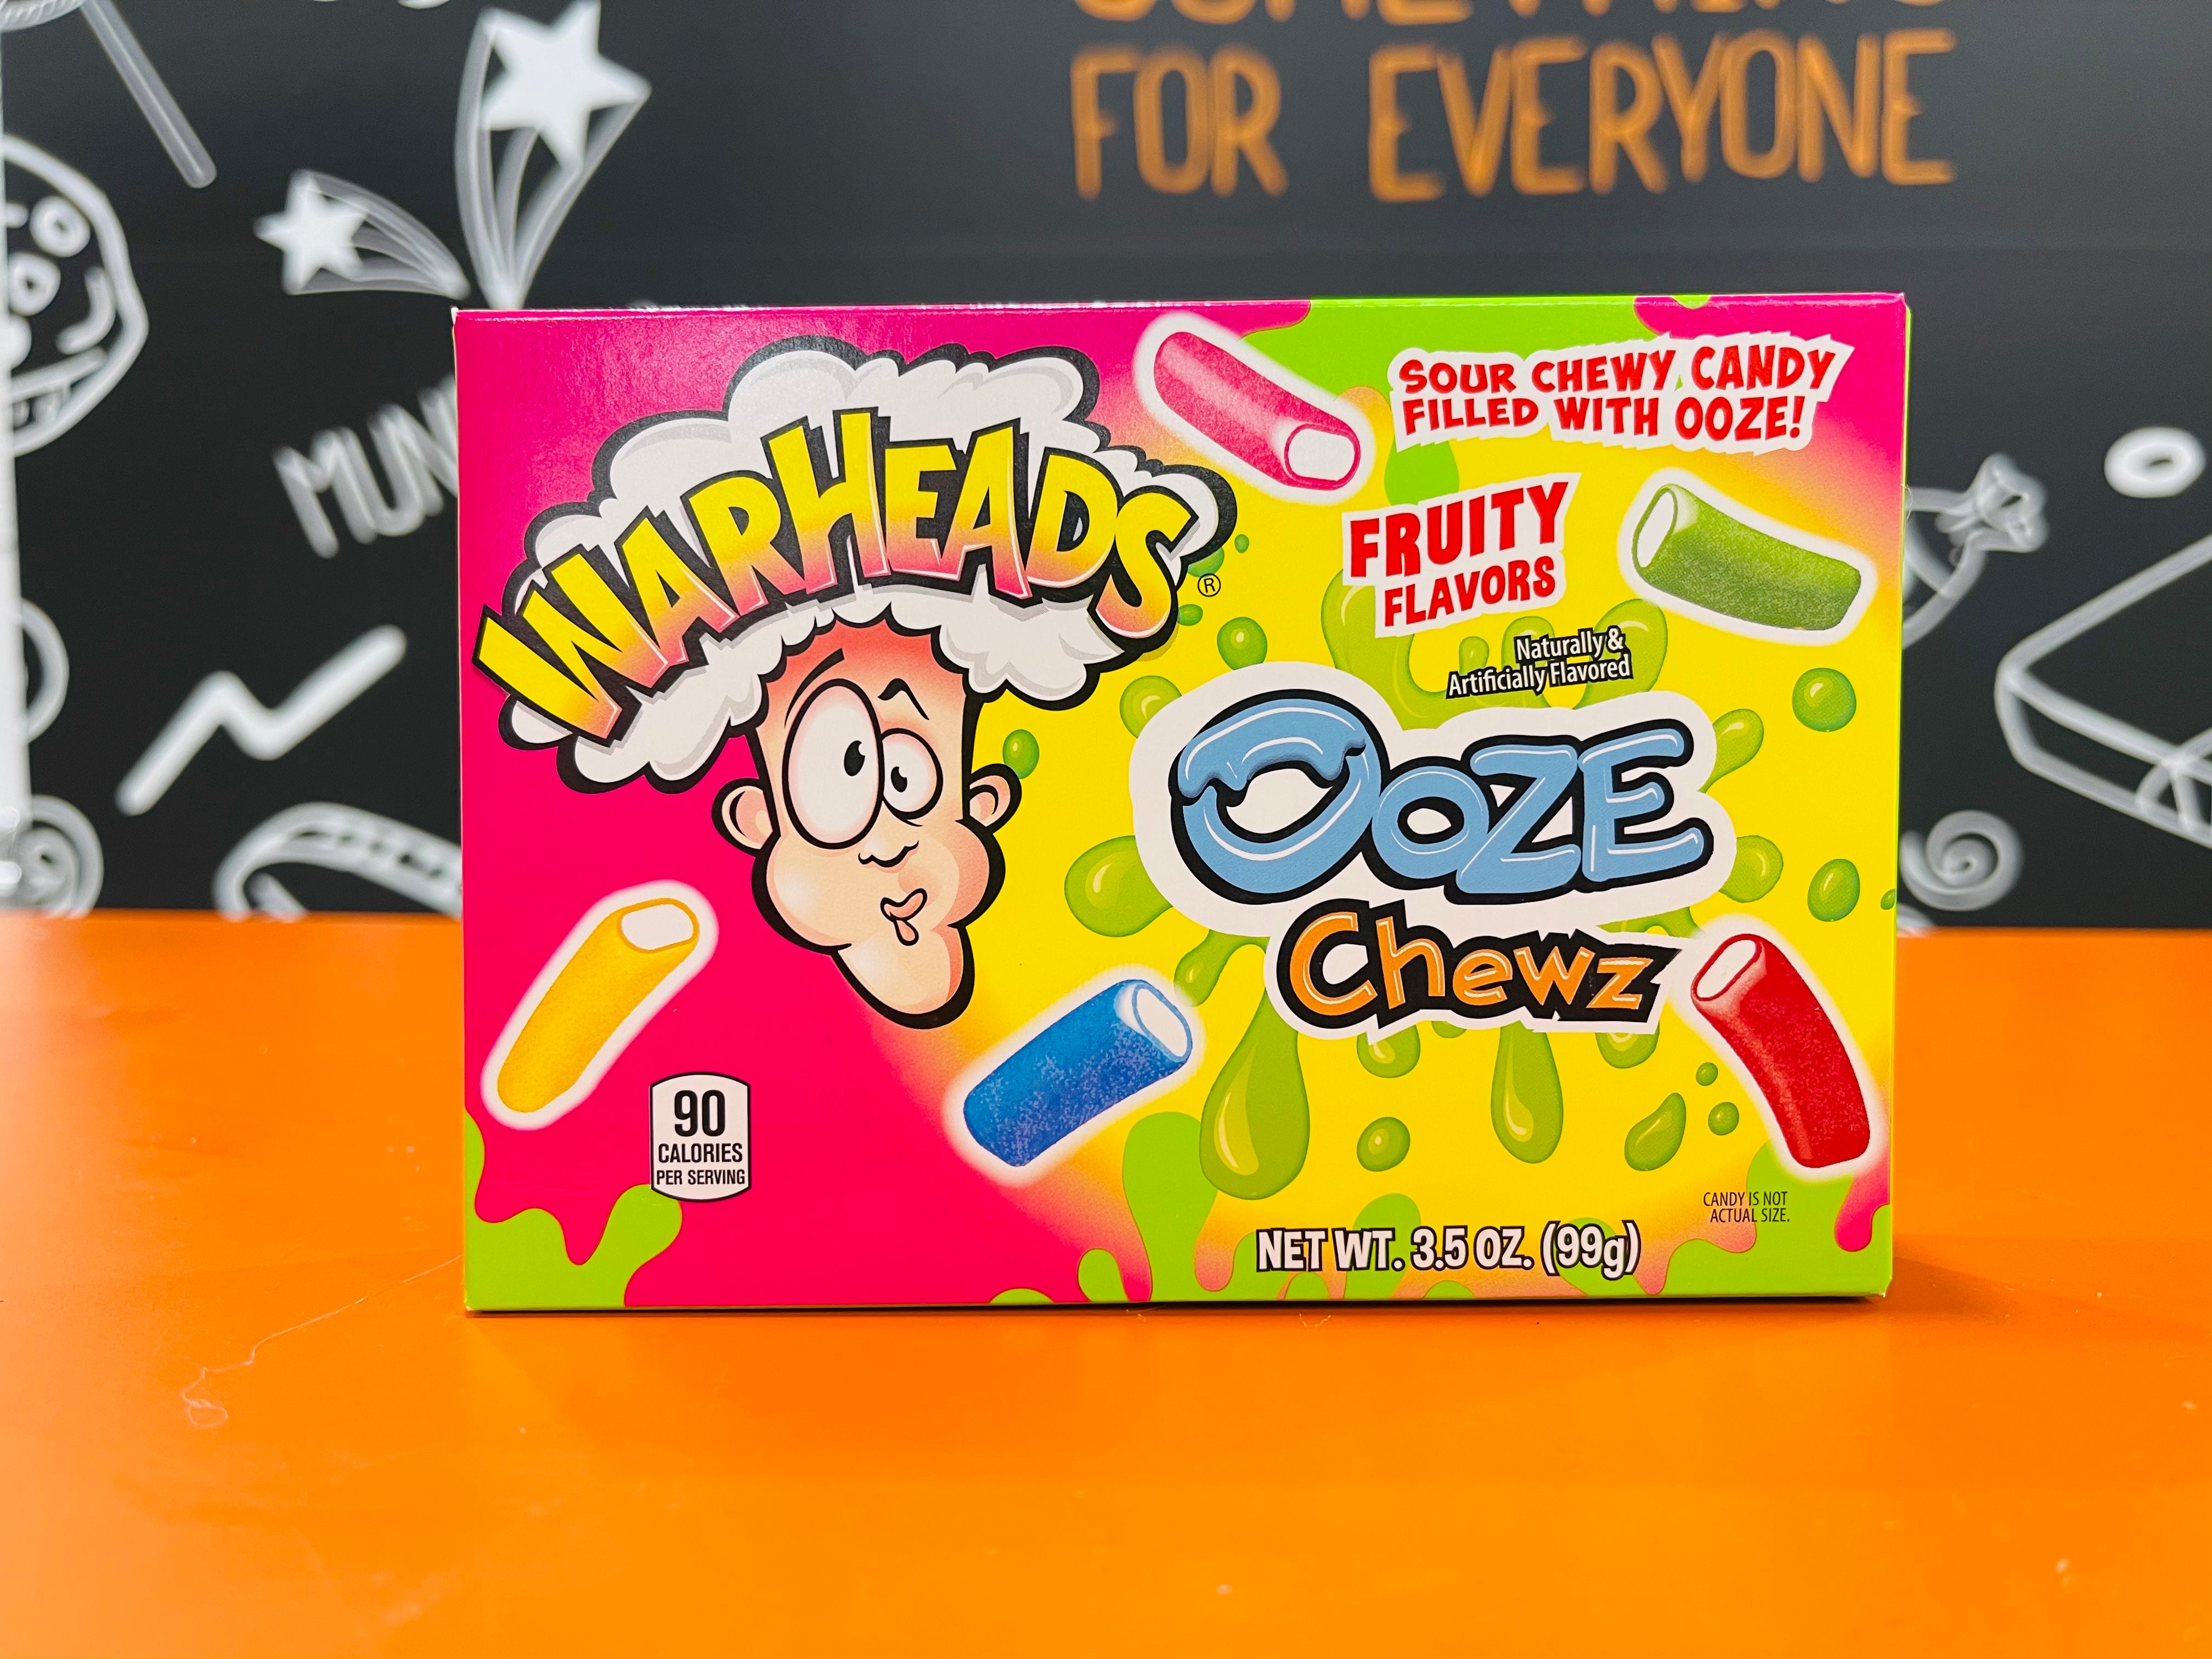 Warheads Fruity Ooze Chewz